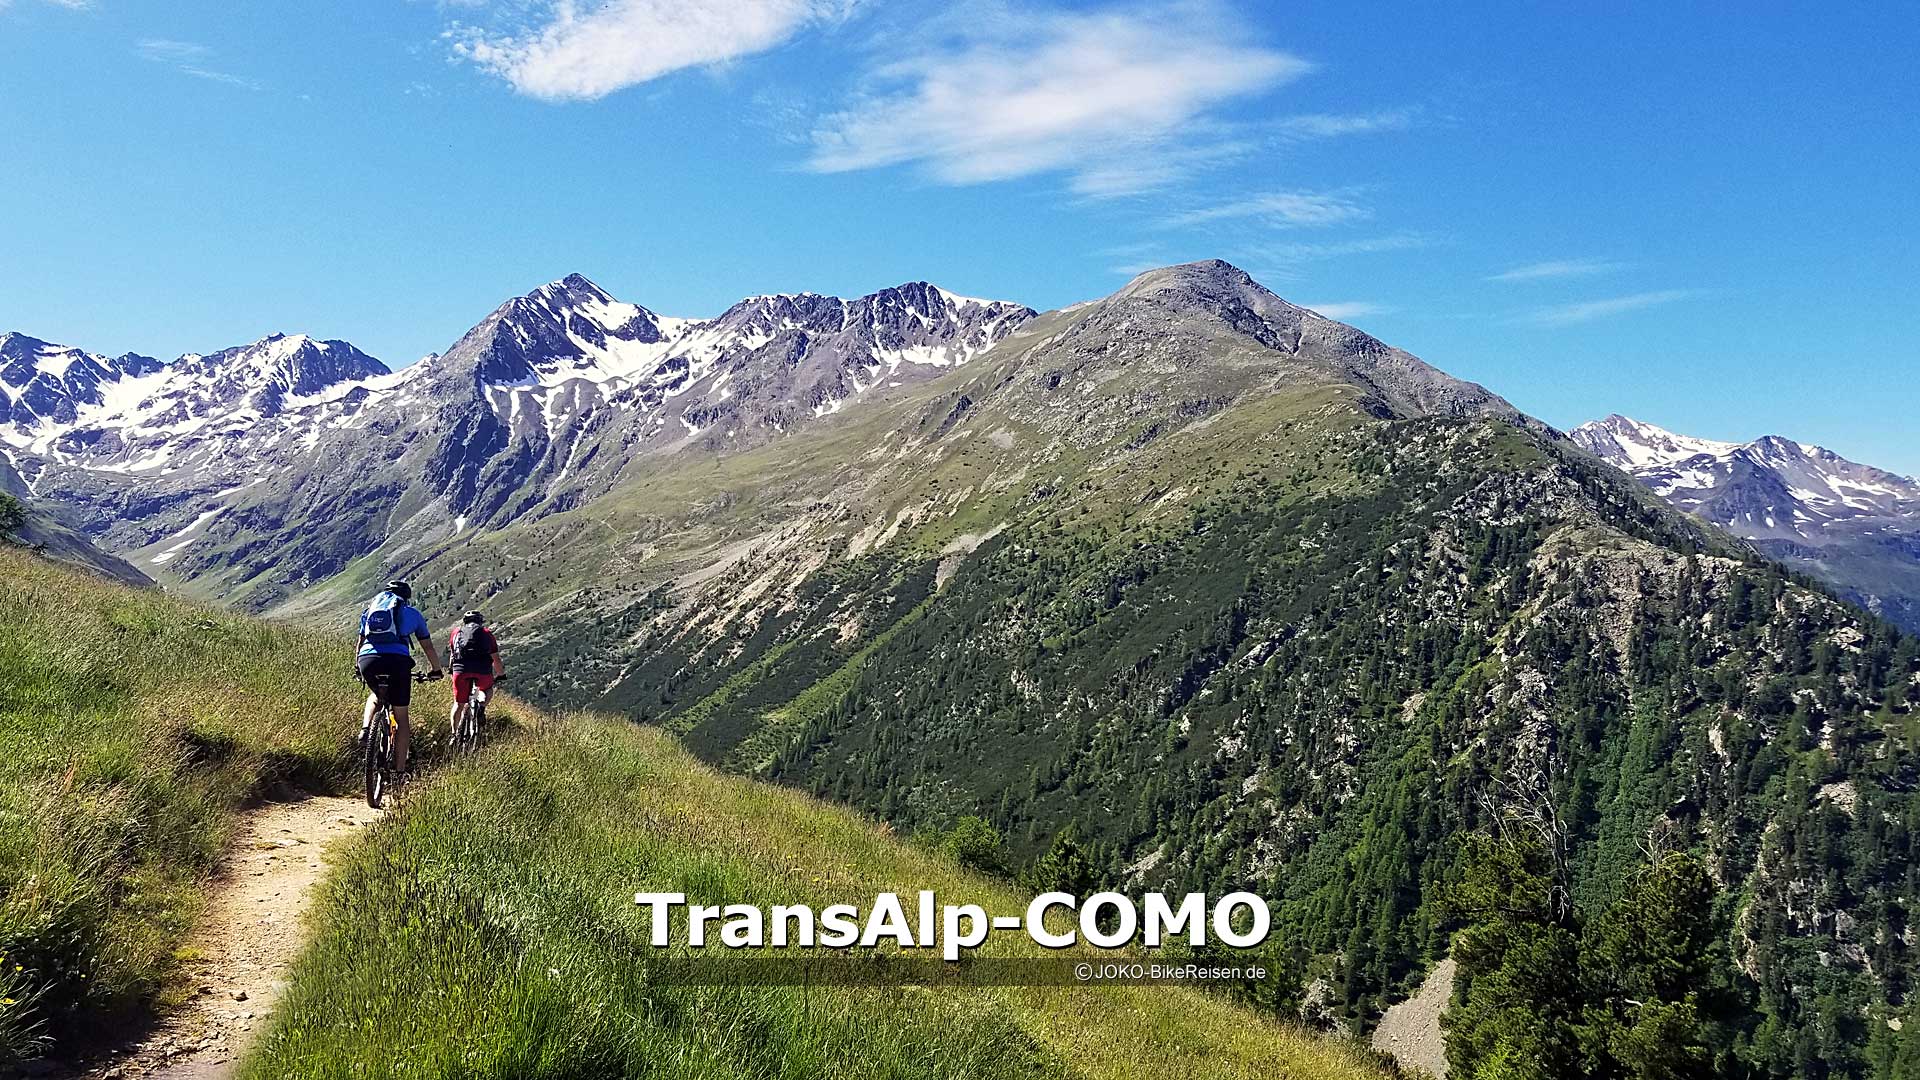 MTB-Flowtrail Alpencross zum Comer See COMO